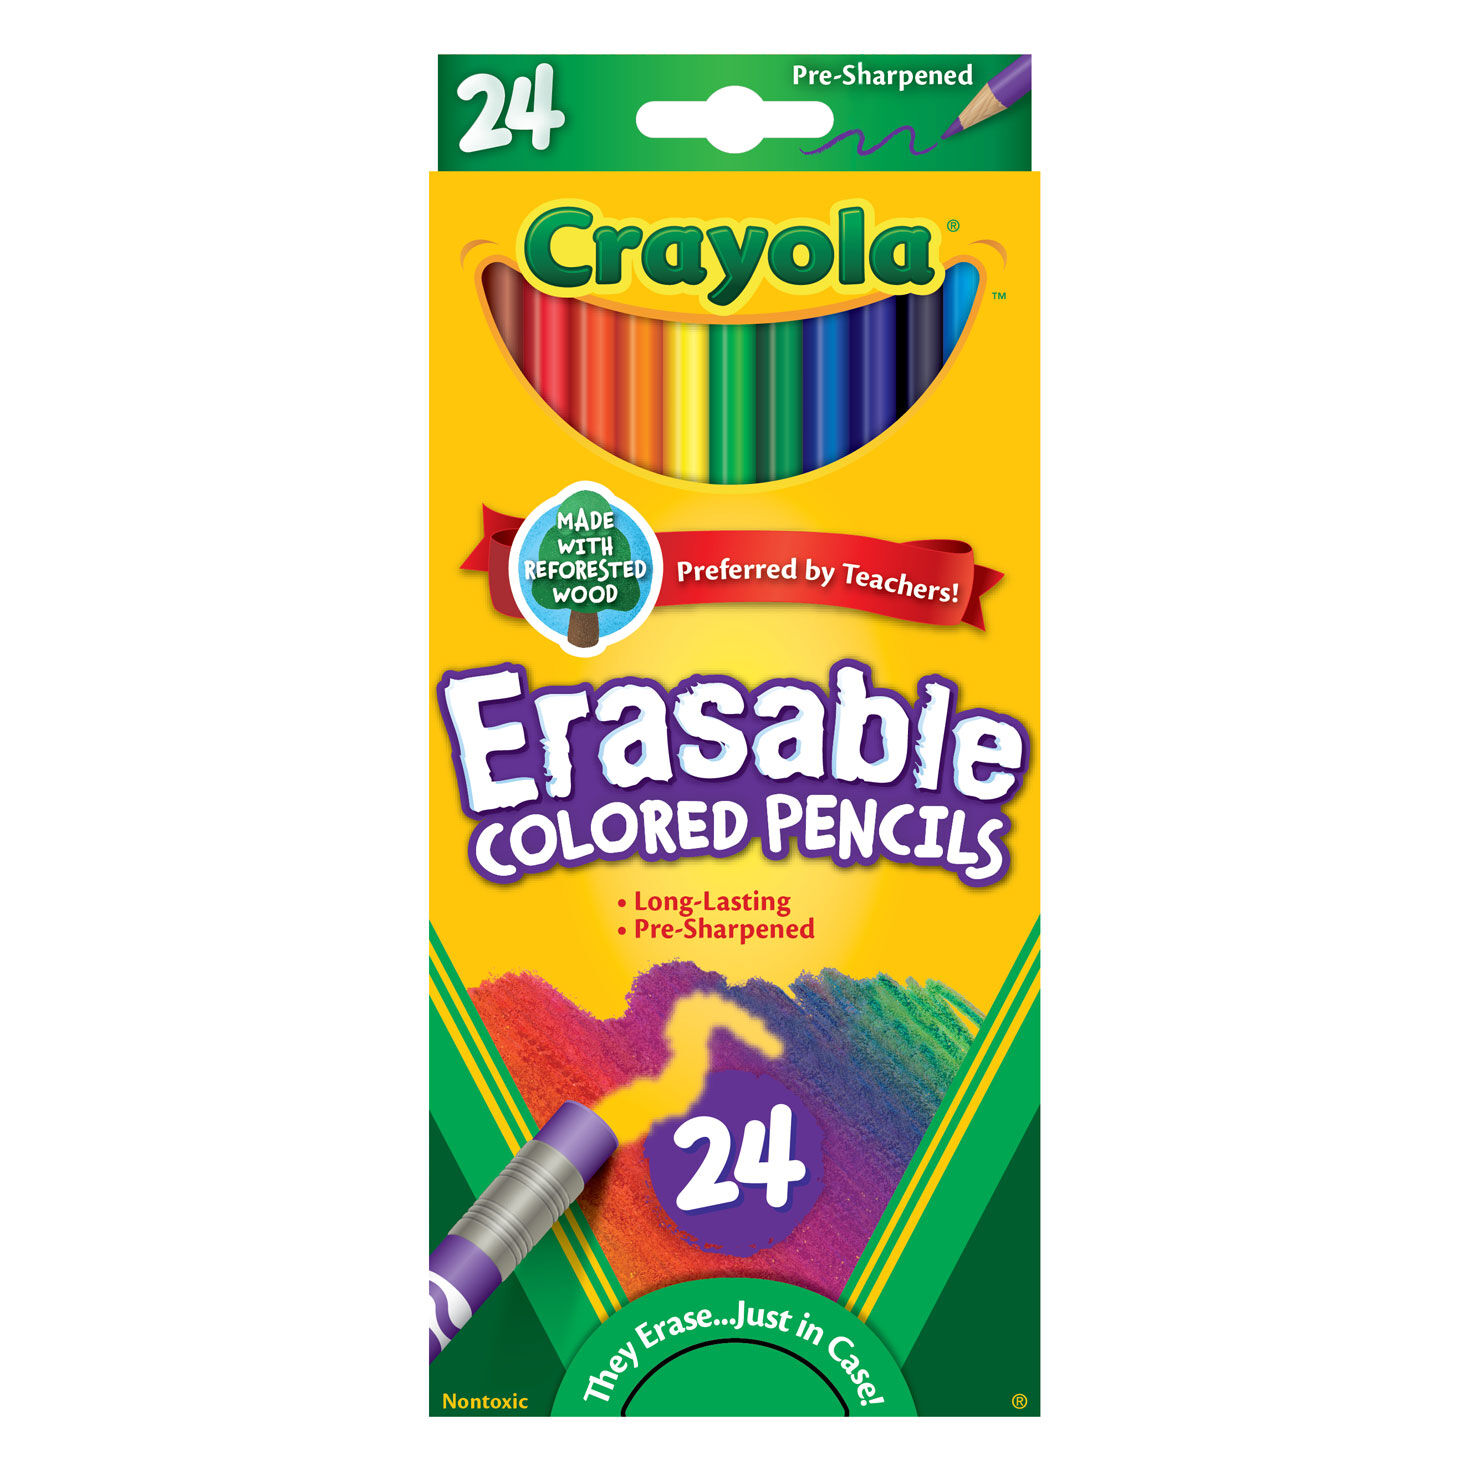 https://www.hallmark.com/dw/image/v2/AALB_PRD/on/demandware.static/-/Sites-hallmark-master/default/dw181c6c0e/images/finished-goods/products/682424/Crayola-24Count-Erasable-Colored-Pencils_682424_01.jpg?sfrm=jpg